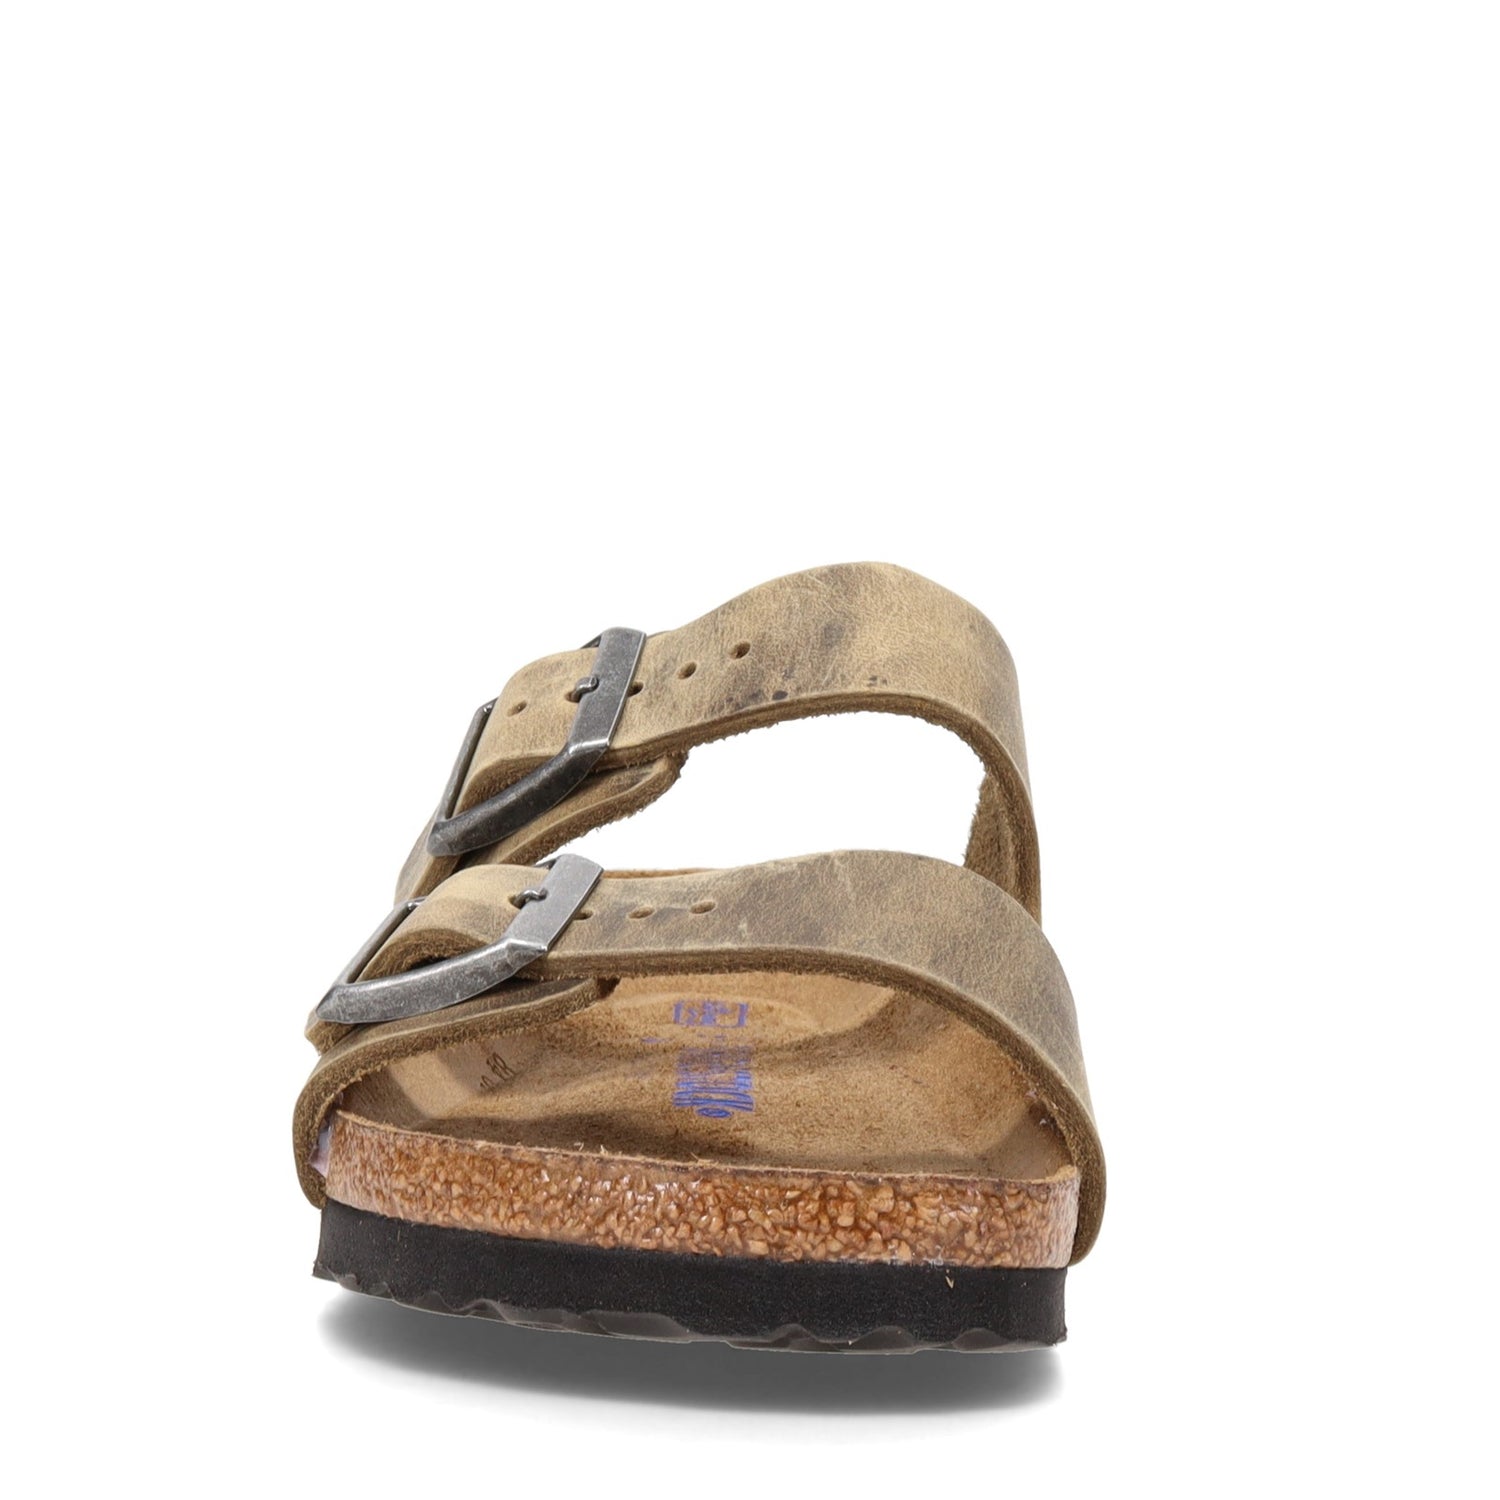 Peltz Shoes  Women's Birkenstock Arizona Soft Footbed Sandal - Narrow Width KHAKI 1019 377 N